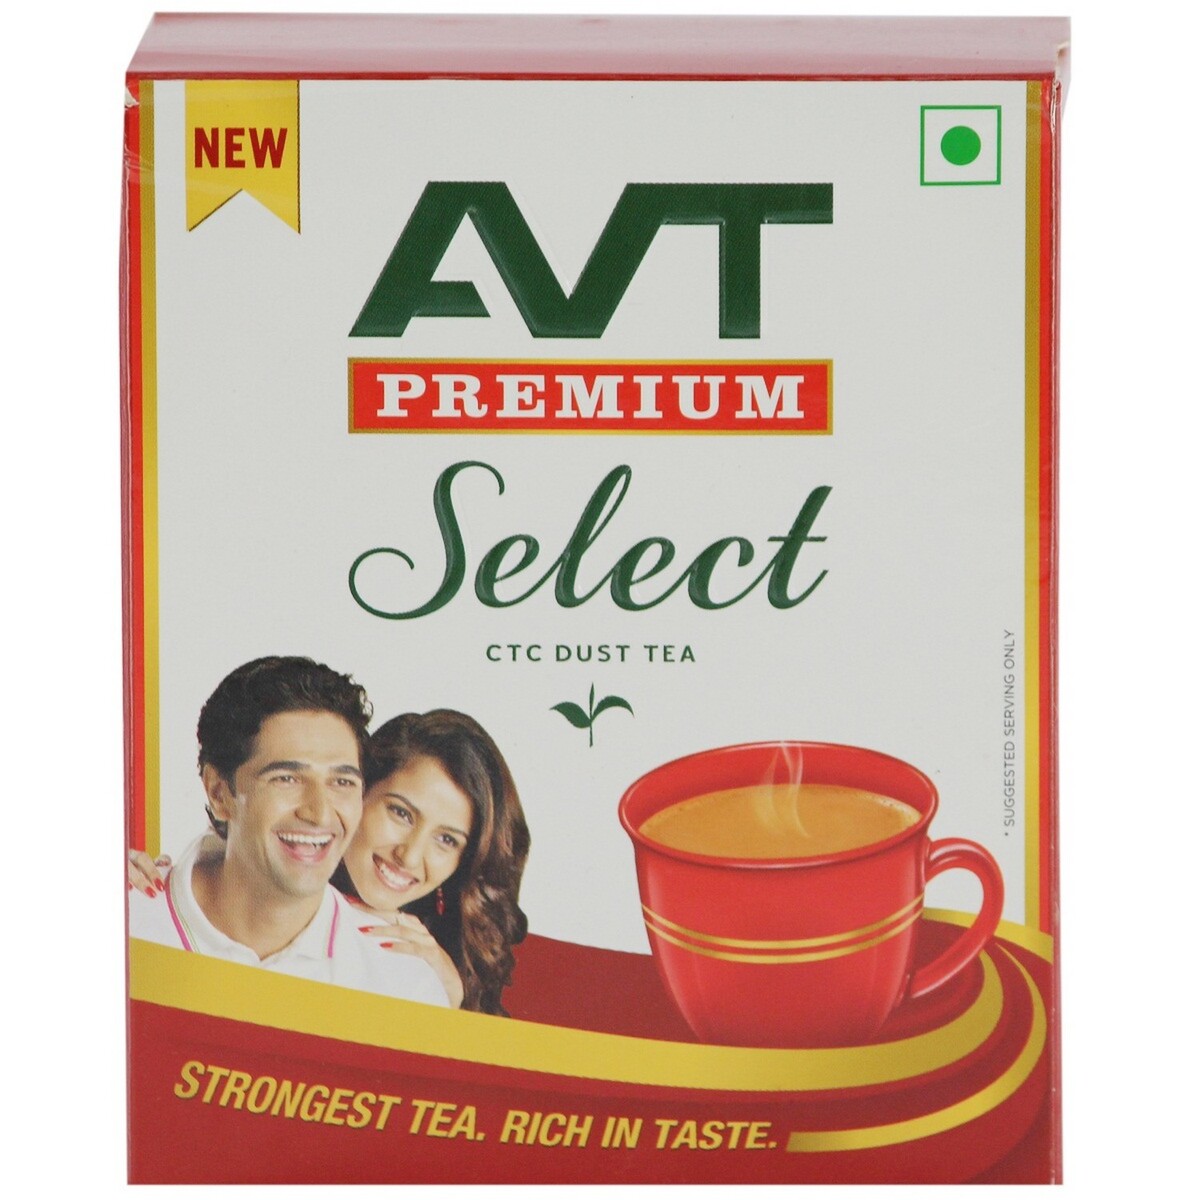 Avt Premium Select CTC Dust Tea 100g